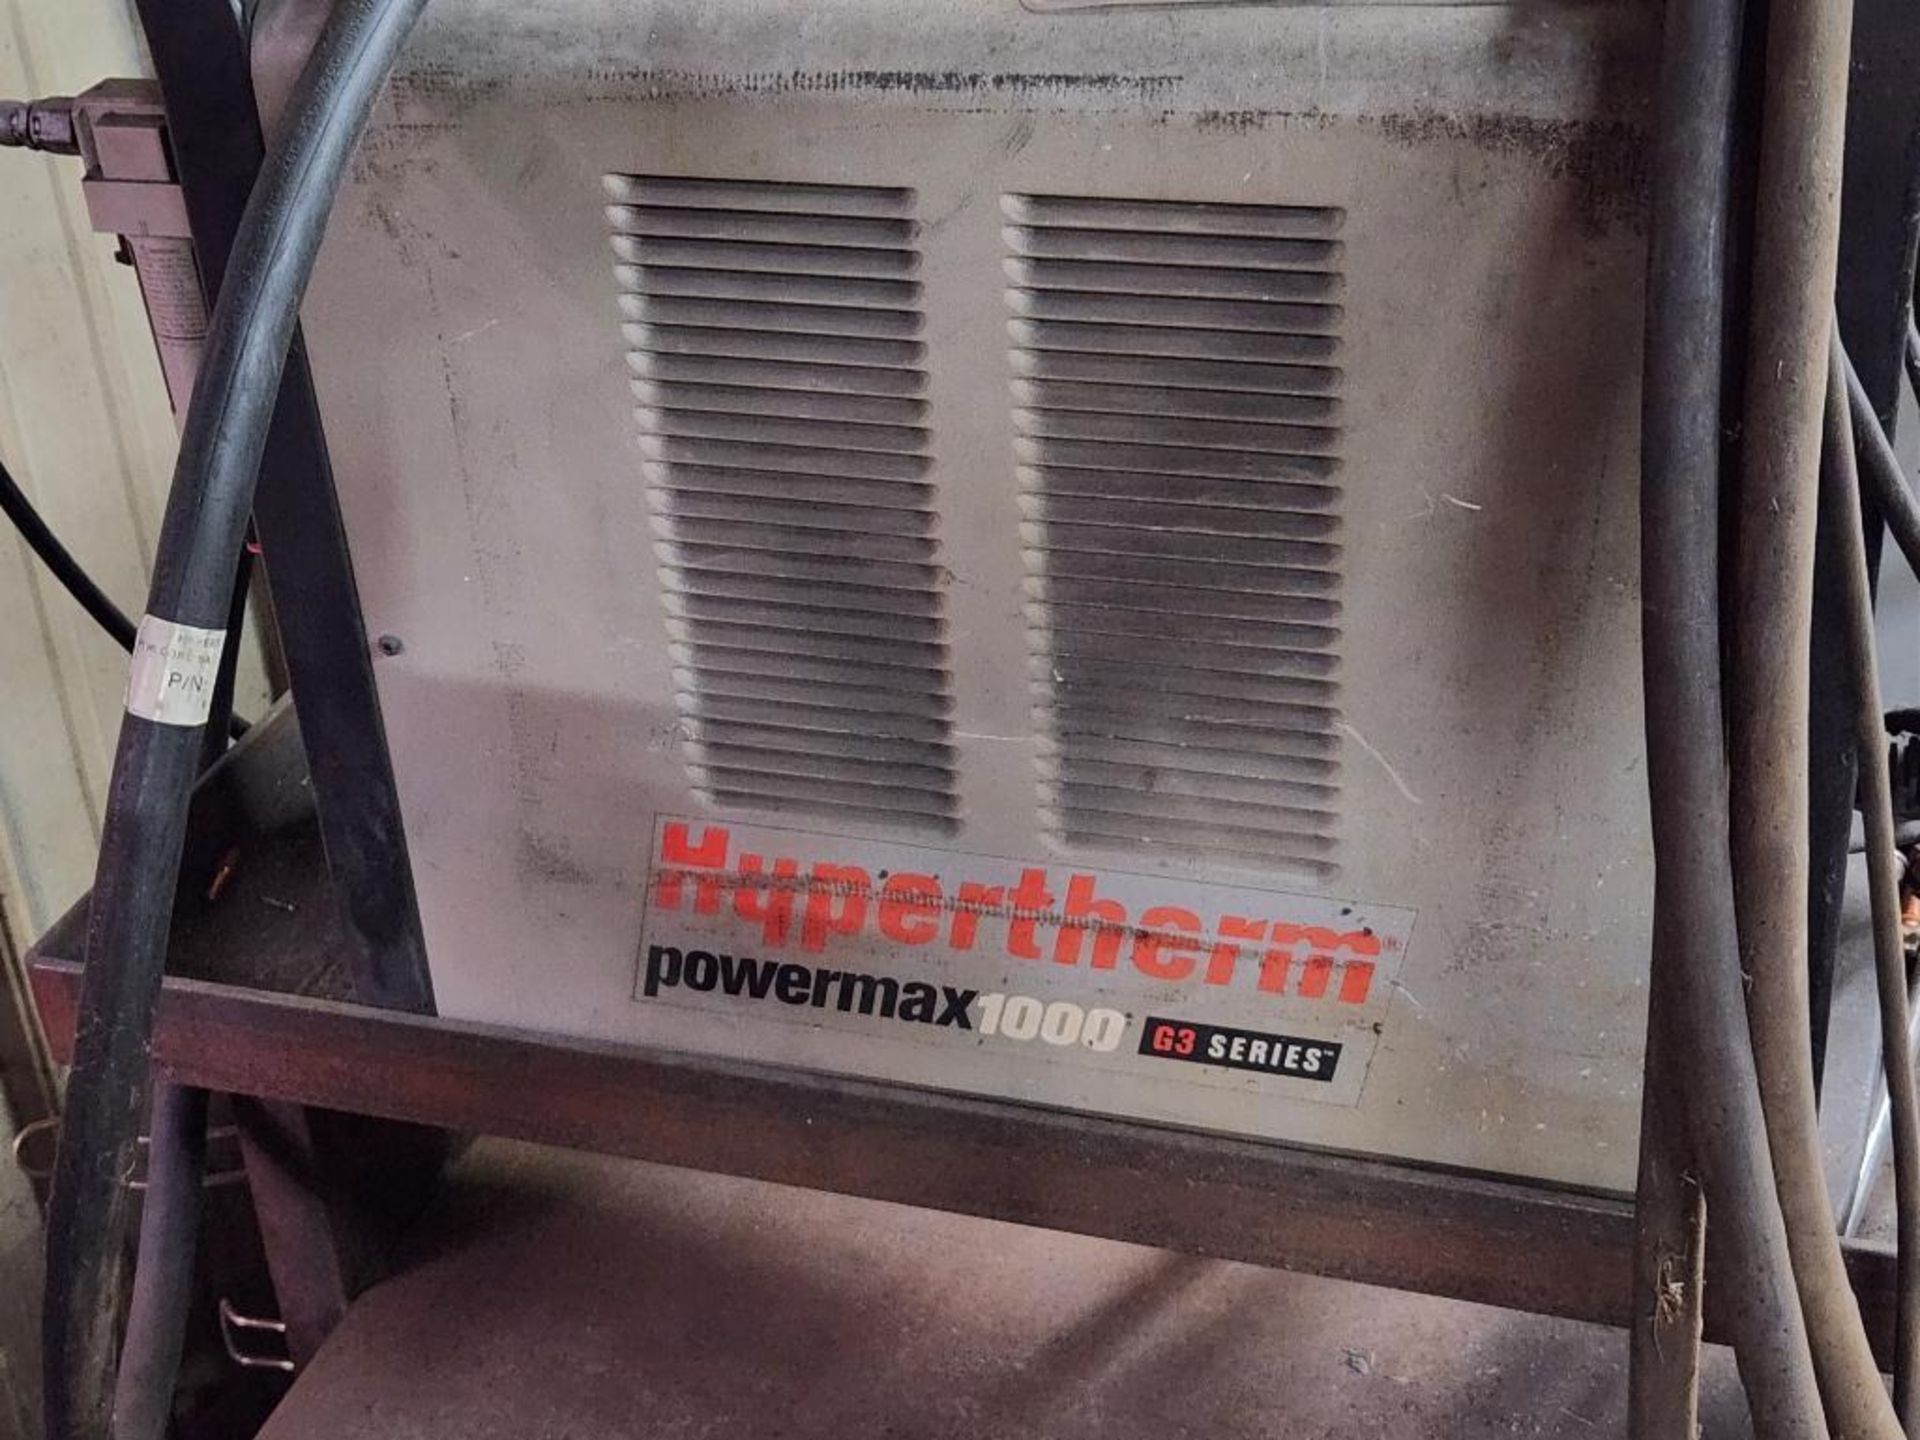 Hypertherm Powermax 1000 G3 Series Plasma Cutter - Image 6 of 6